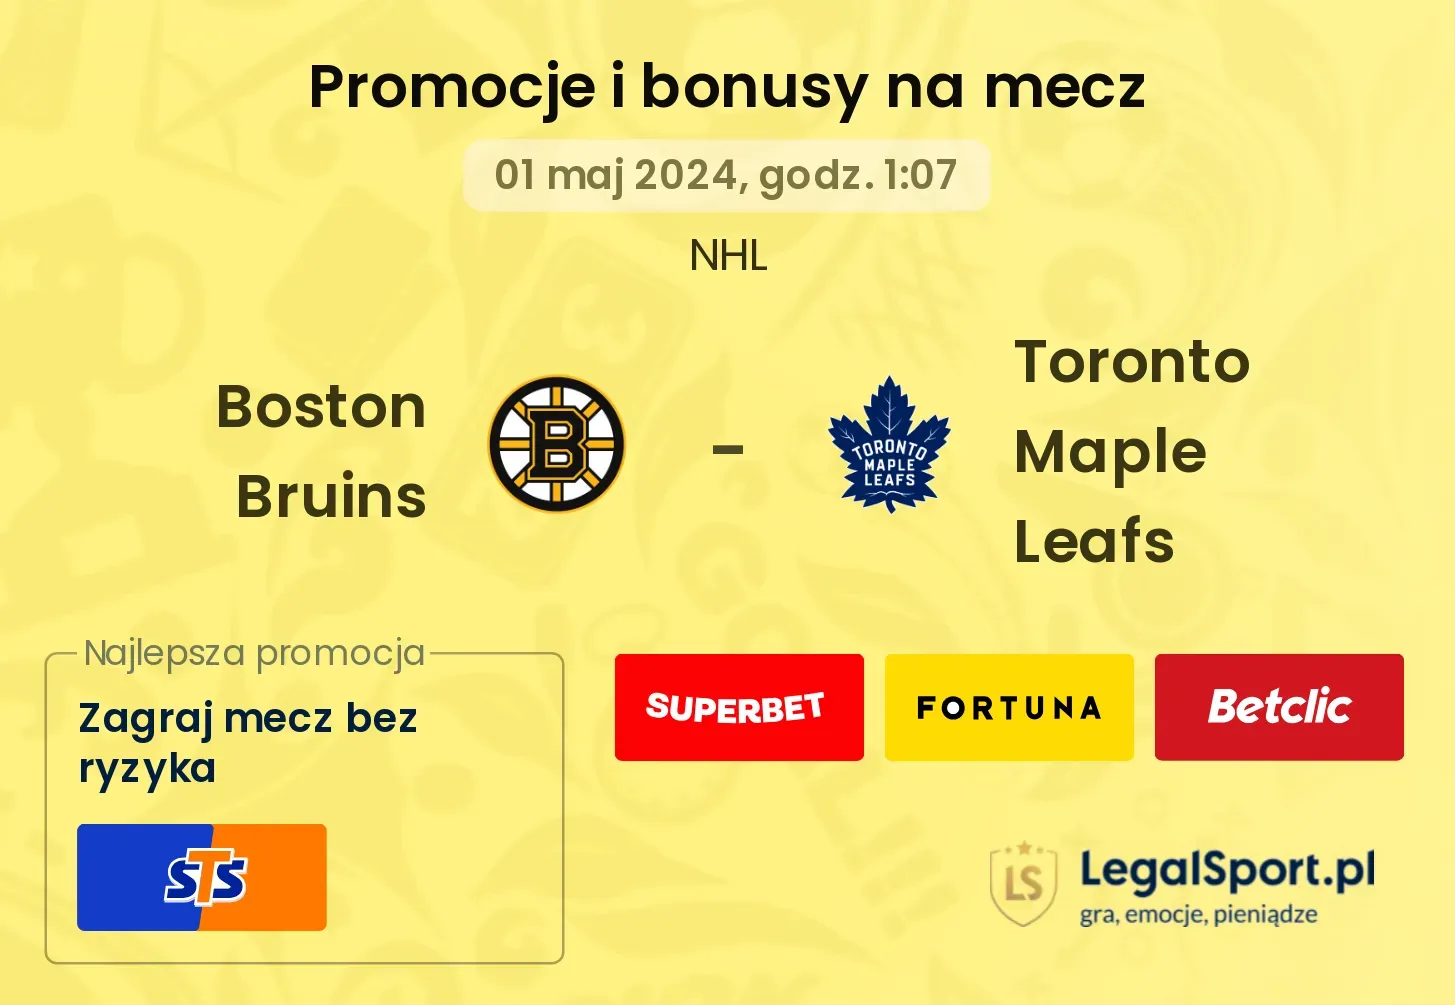 Boston Bruins - Toronto Maple Leafs bonusy i promocje (01.05, 01:07)